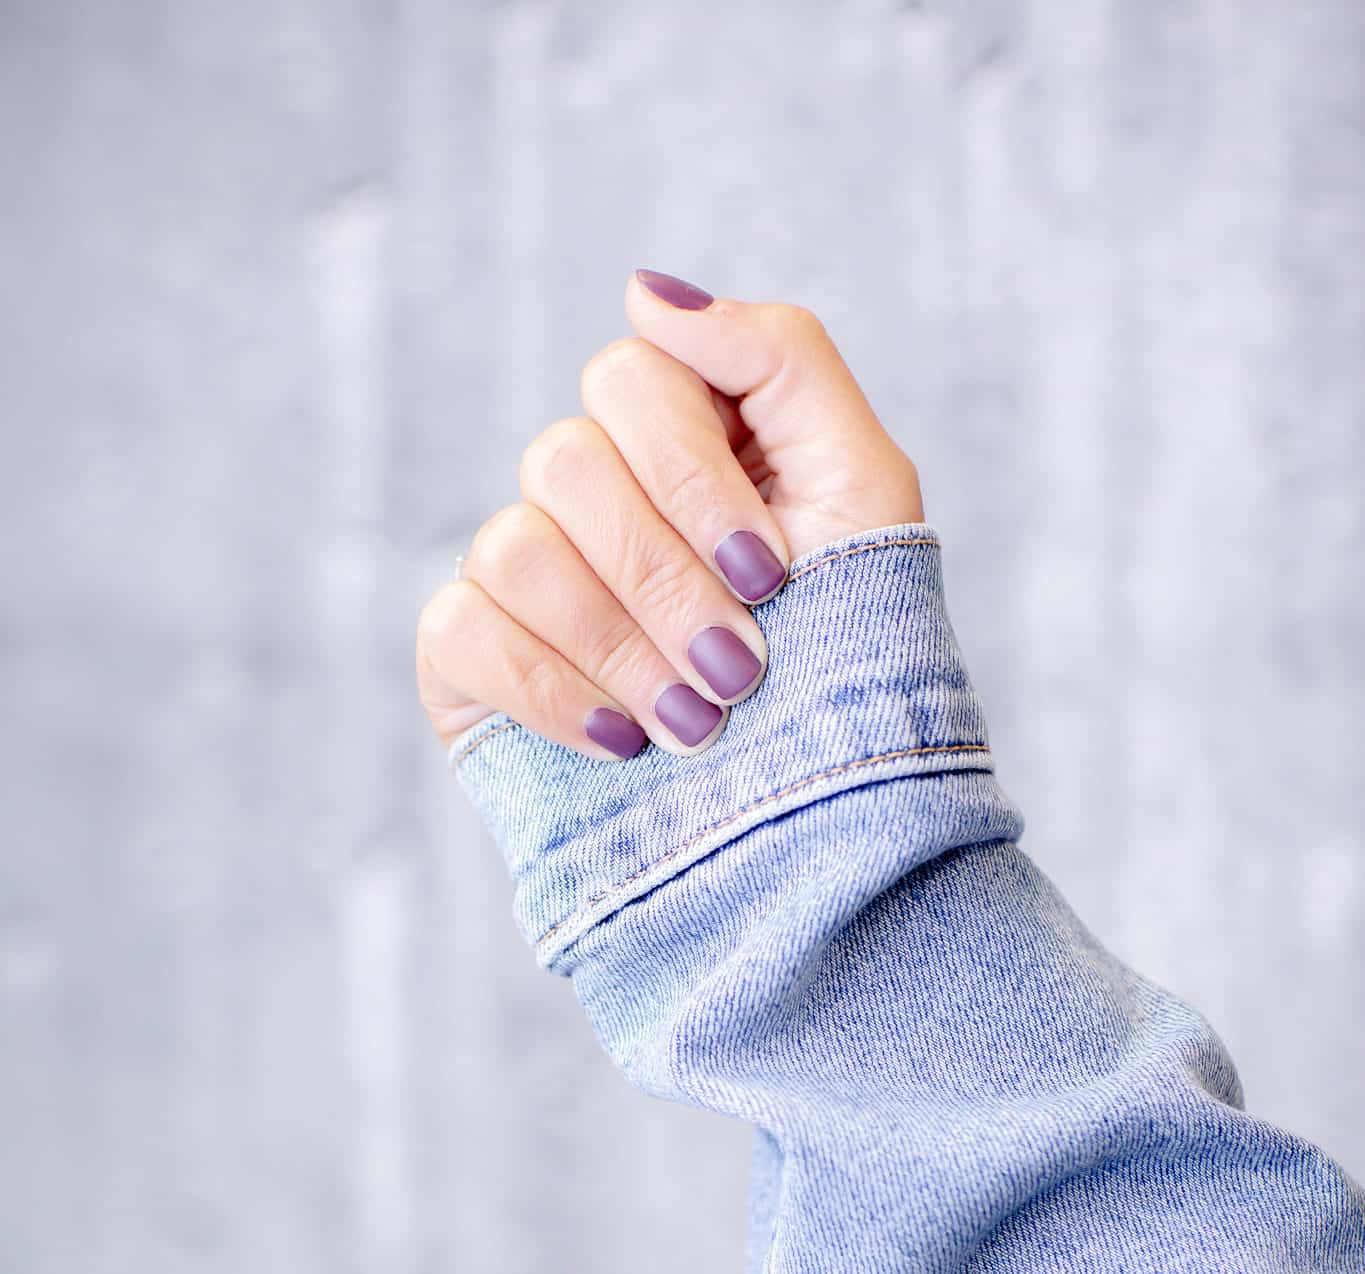 Natural nail shape with purple mani